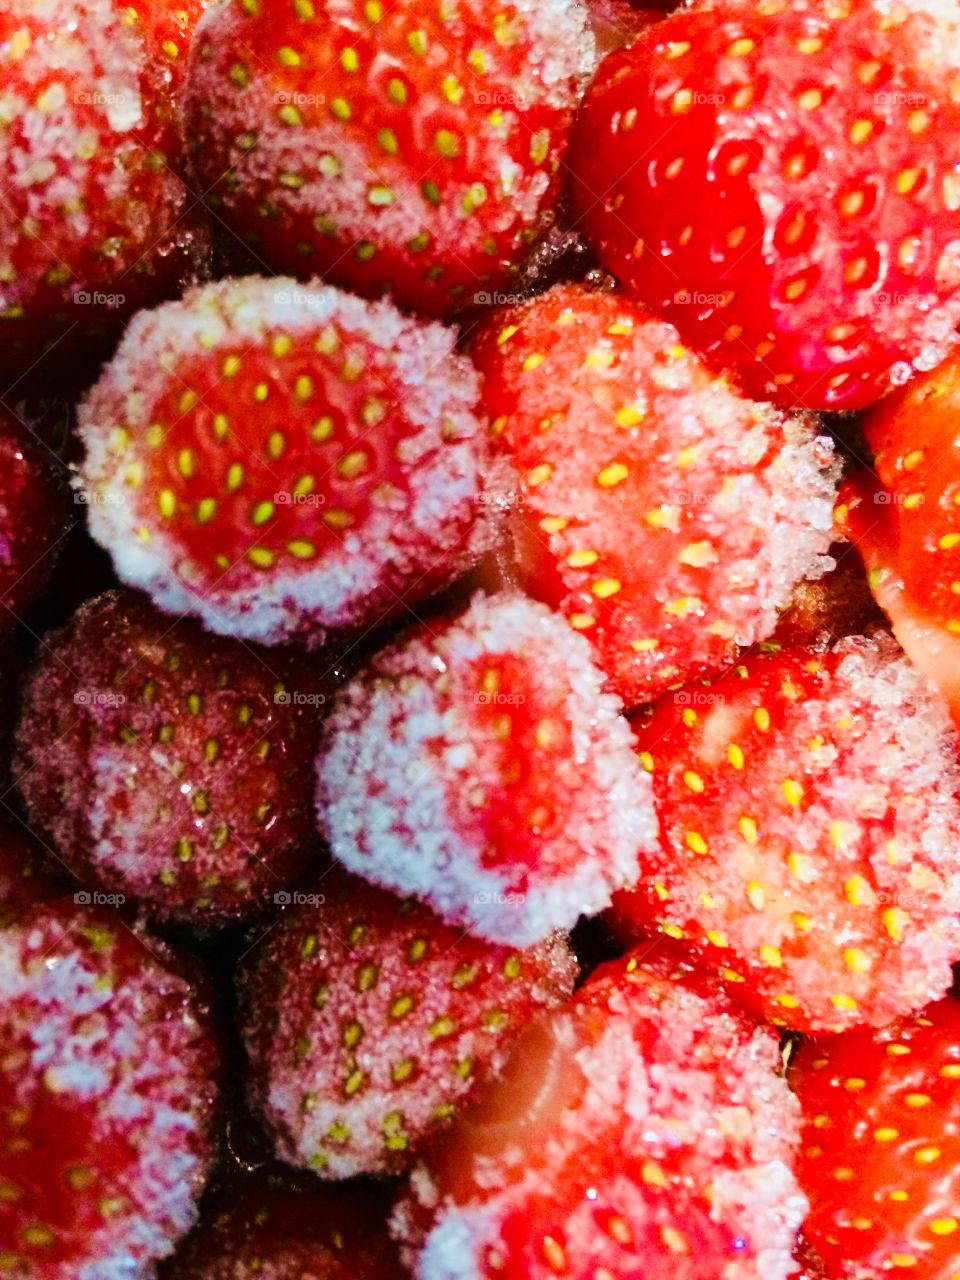 Frozen strawberries 